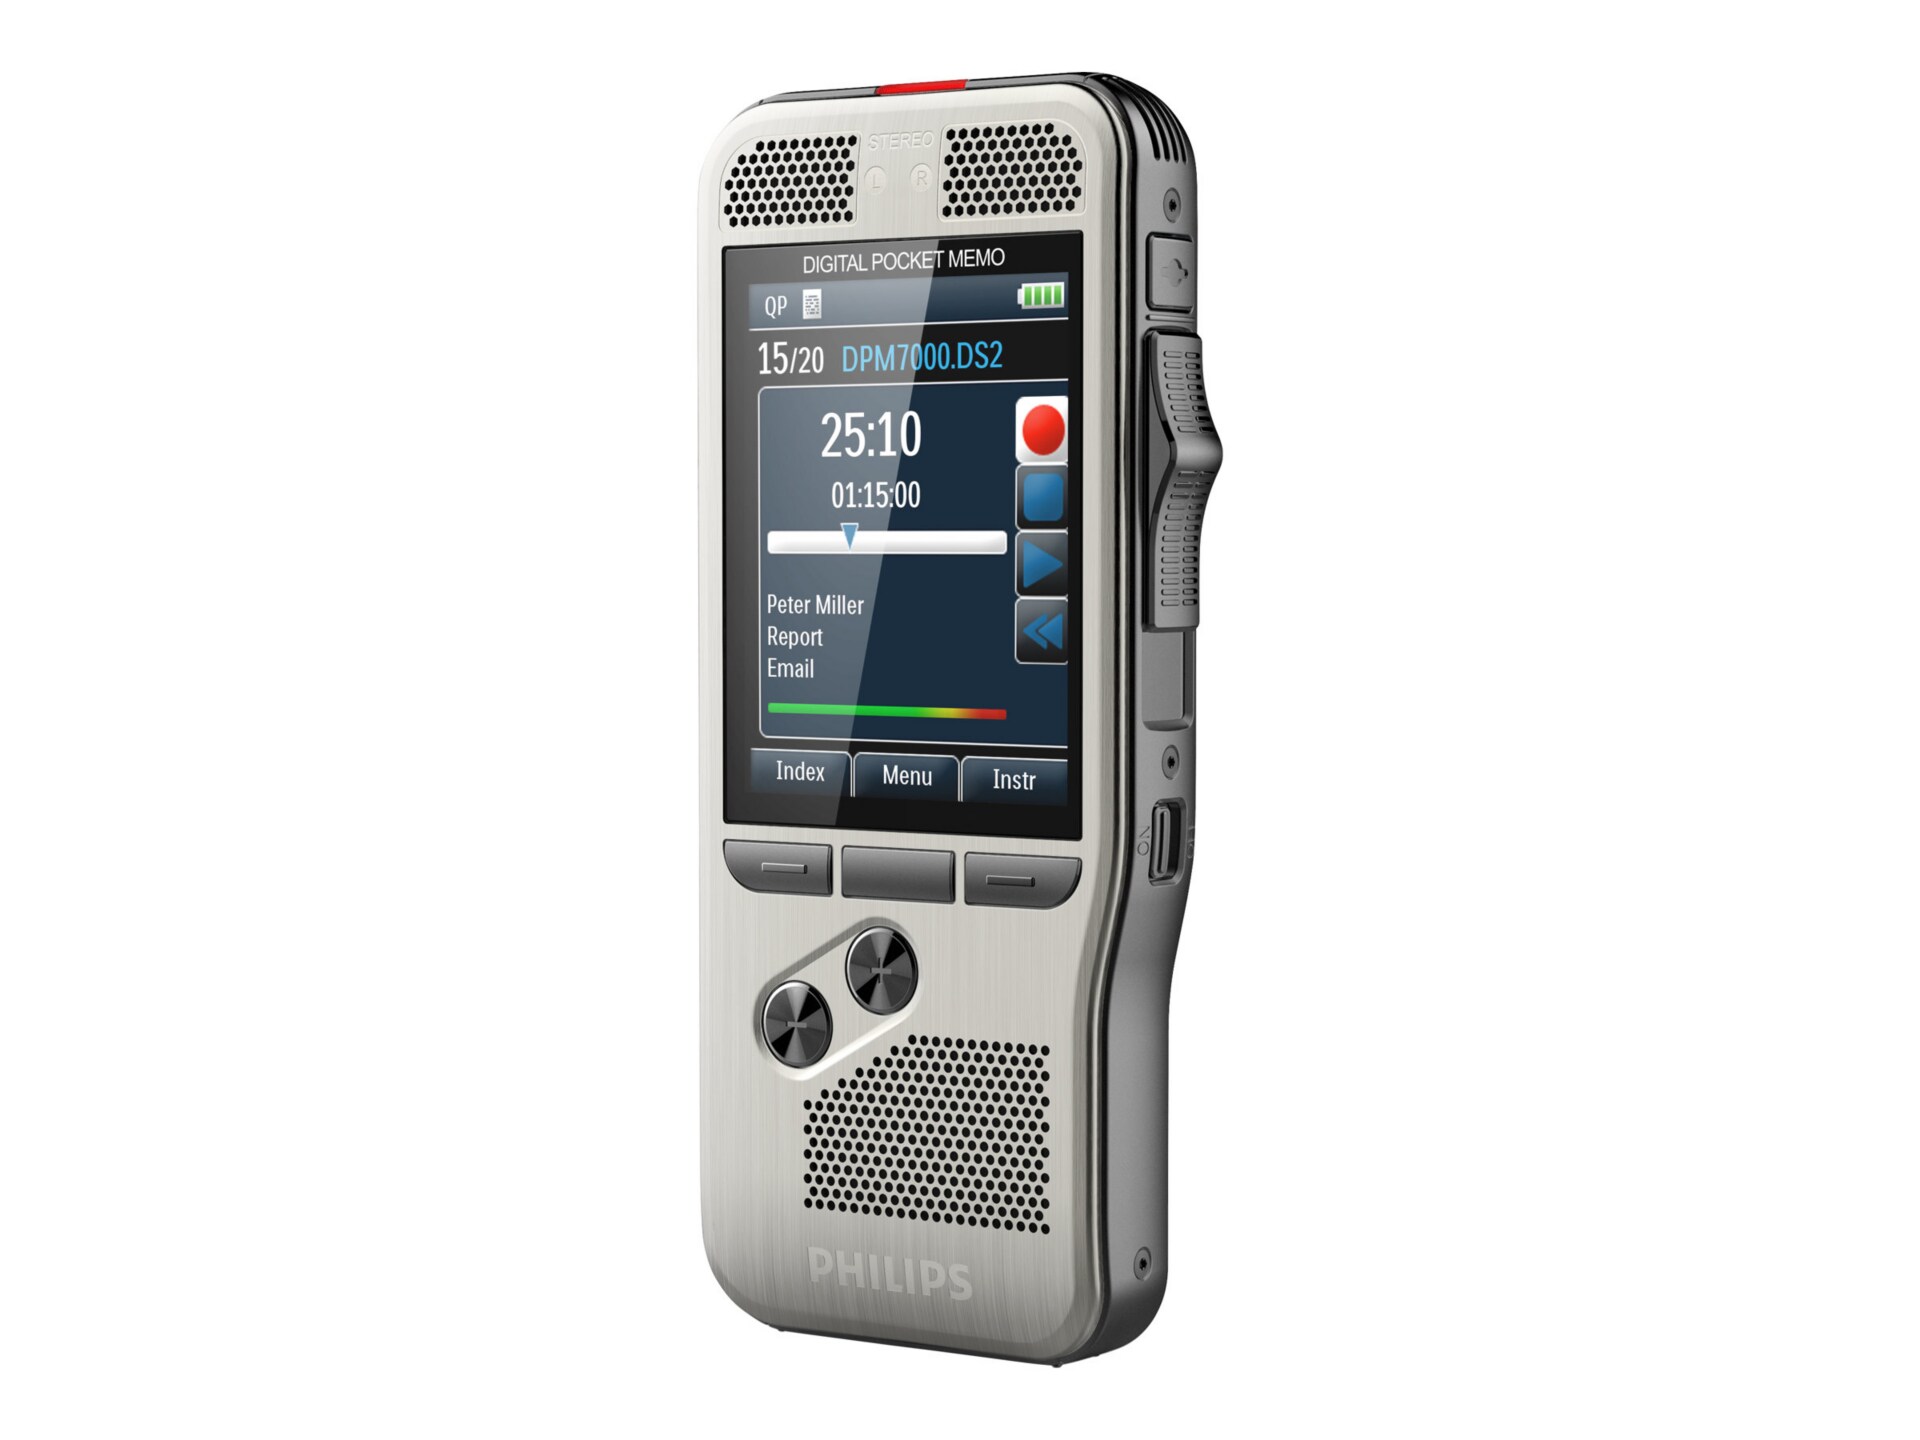 Philips Pocket Memo DPM7000 - voice recorder